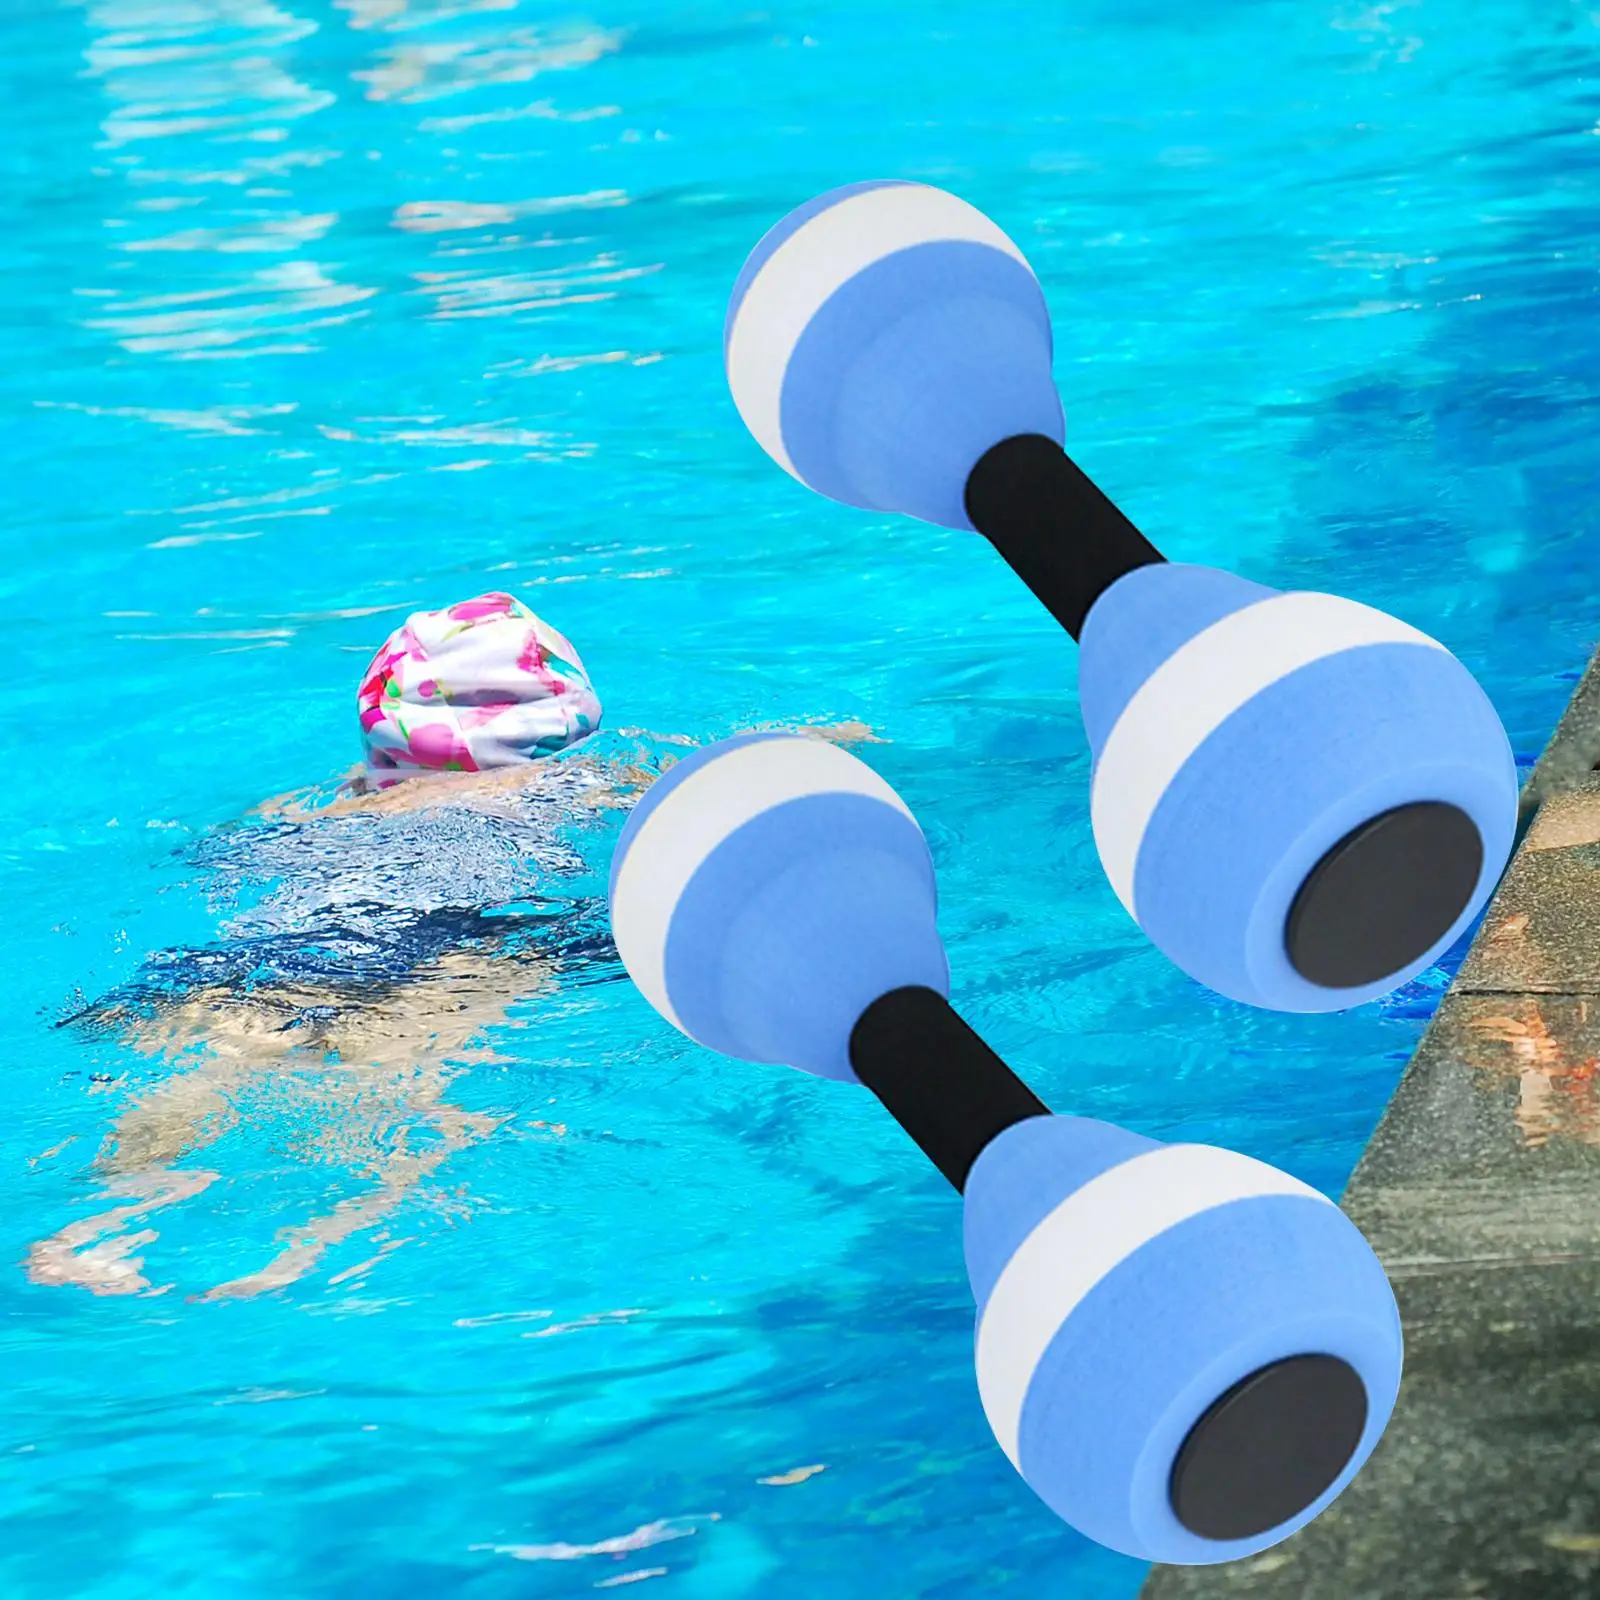 Aquatic Dumbbells Pool Resistance Exercises Equipment Portable Lightweight